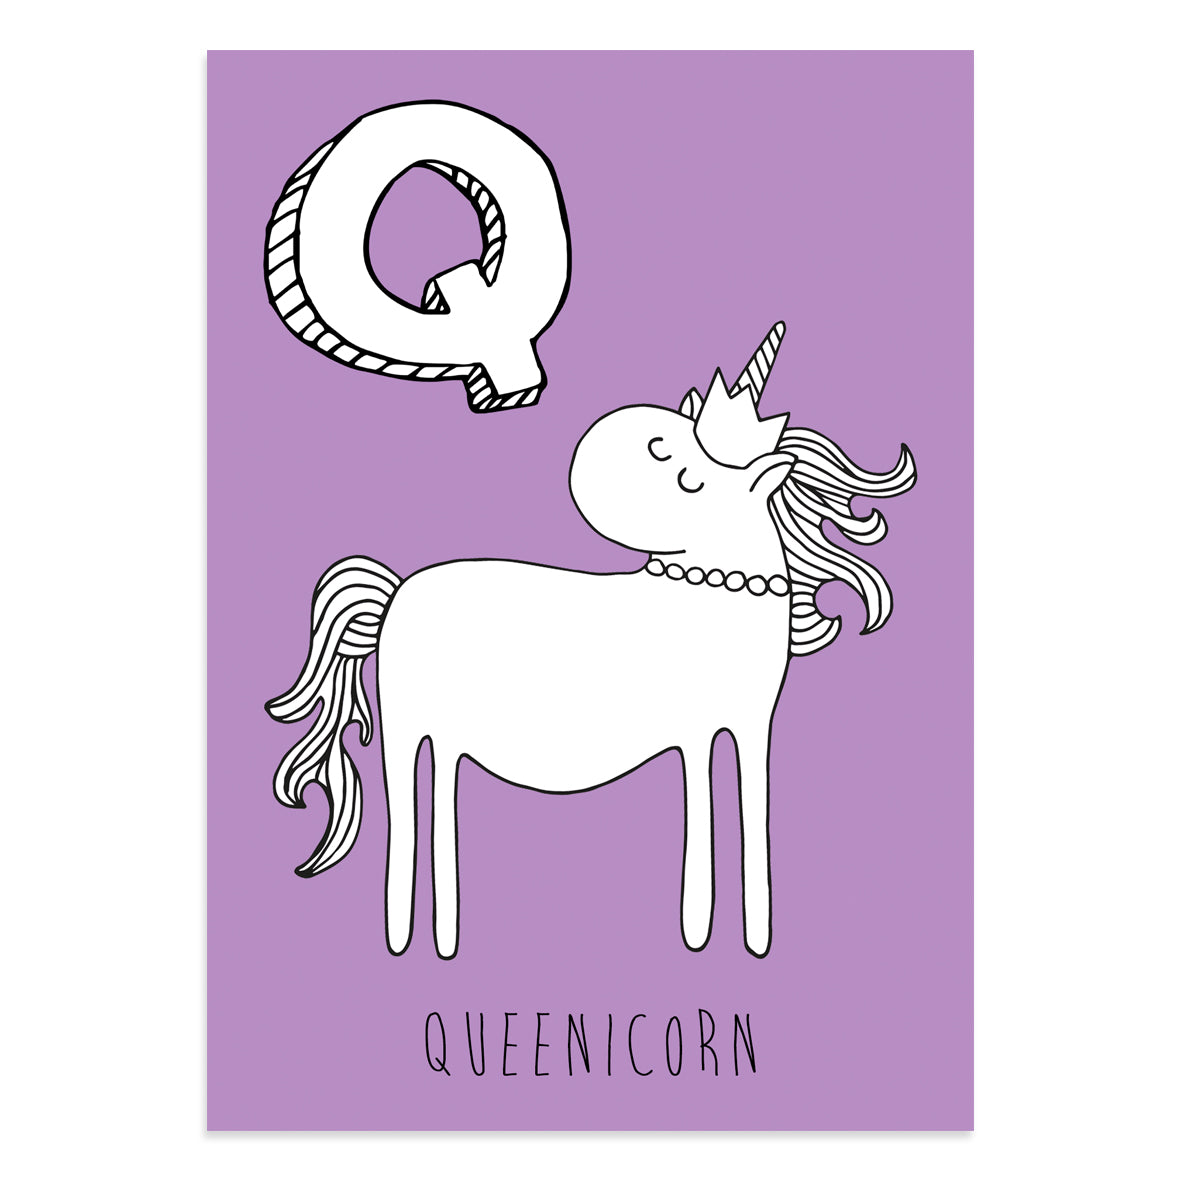 Unicorn postcard featuring the letter Q for queenicorn